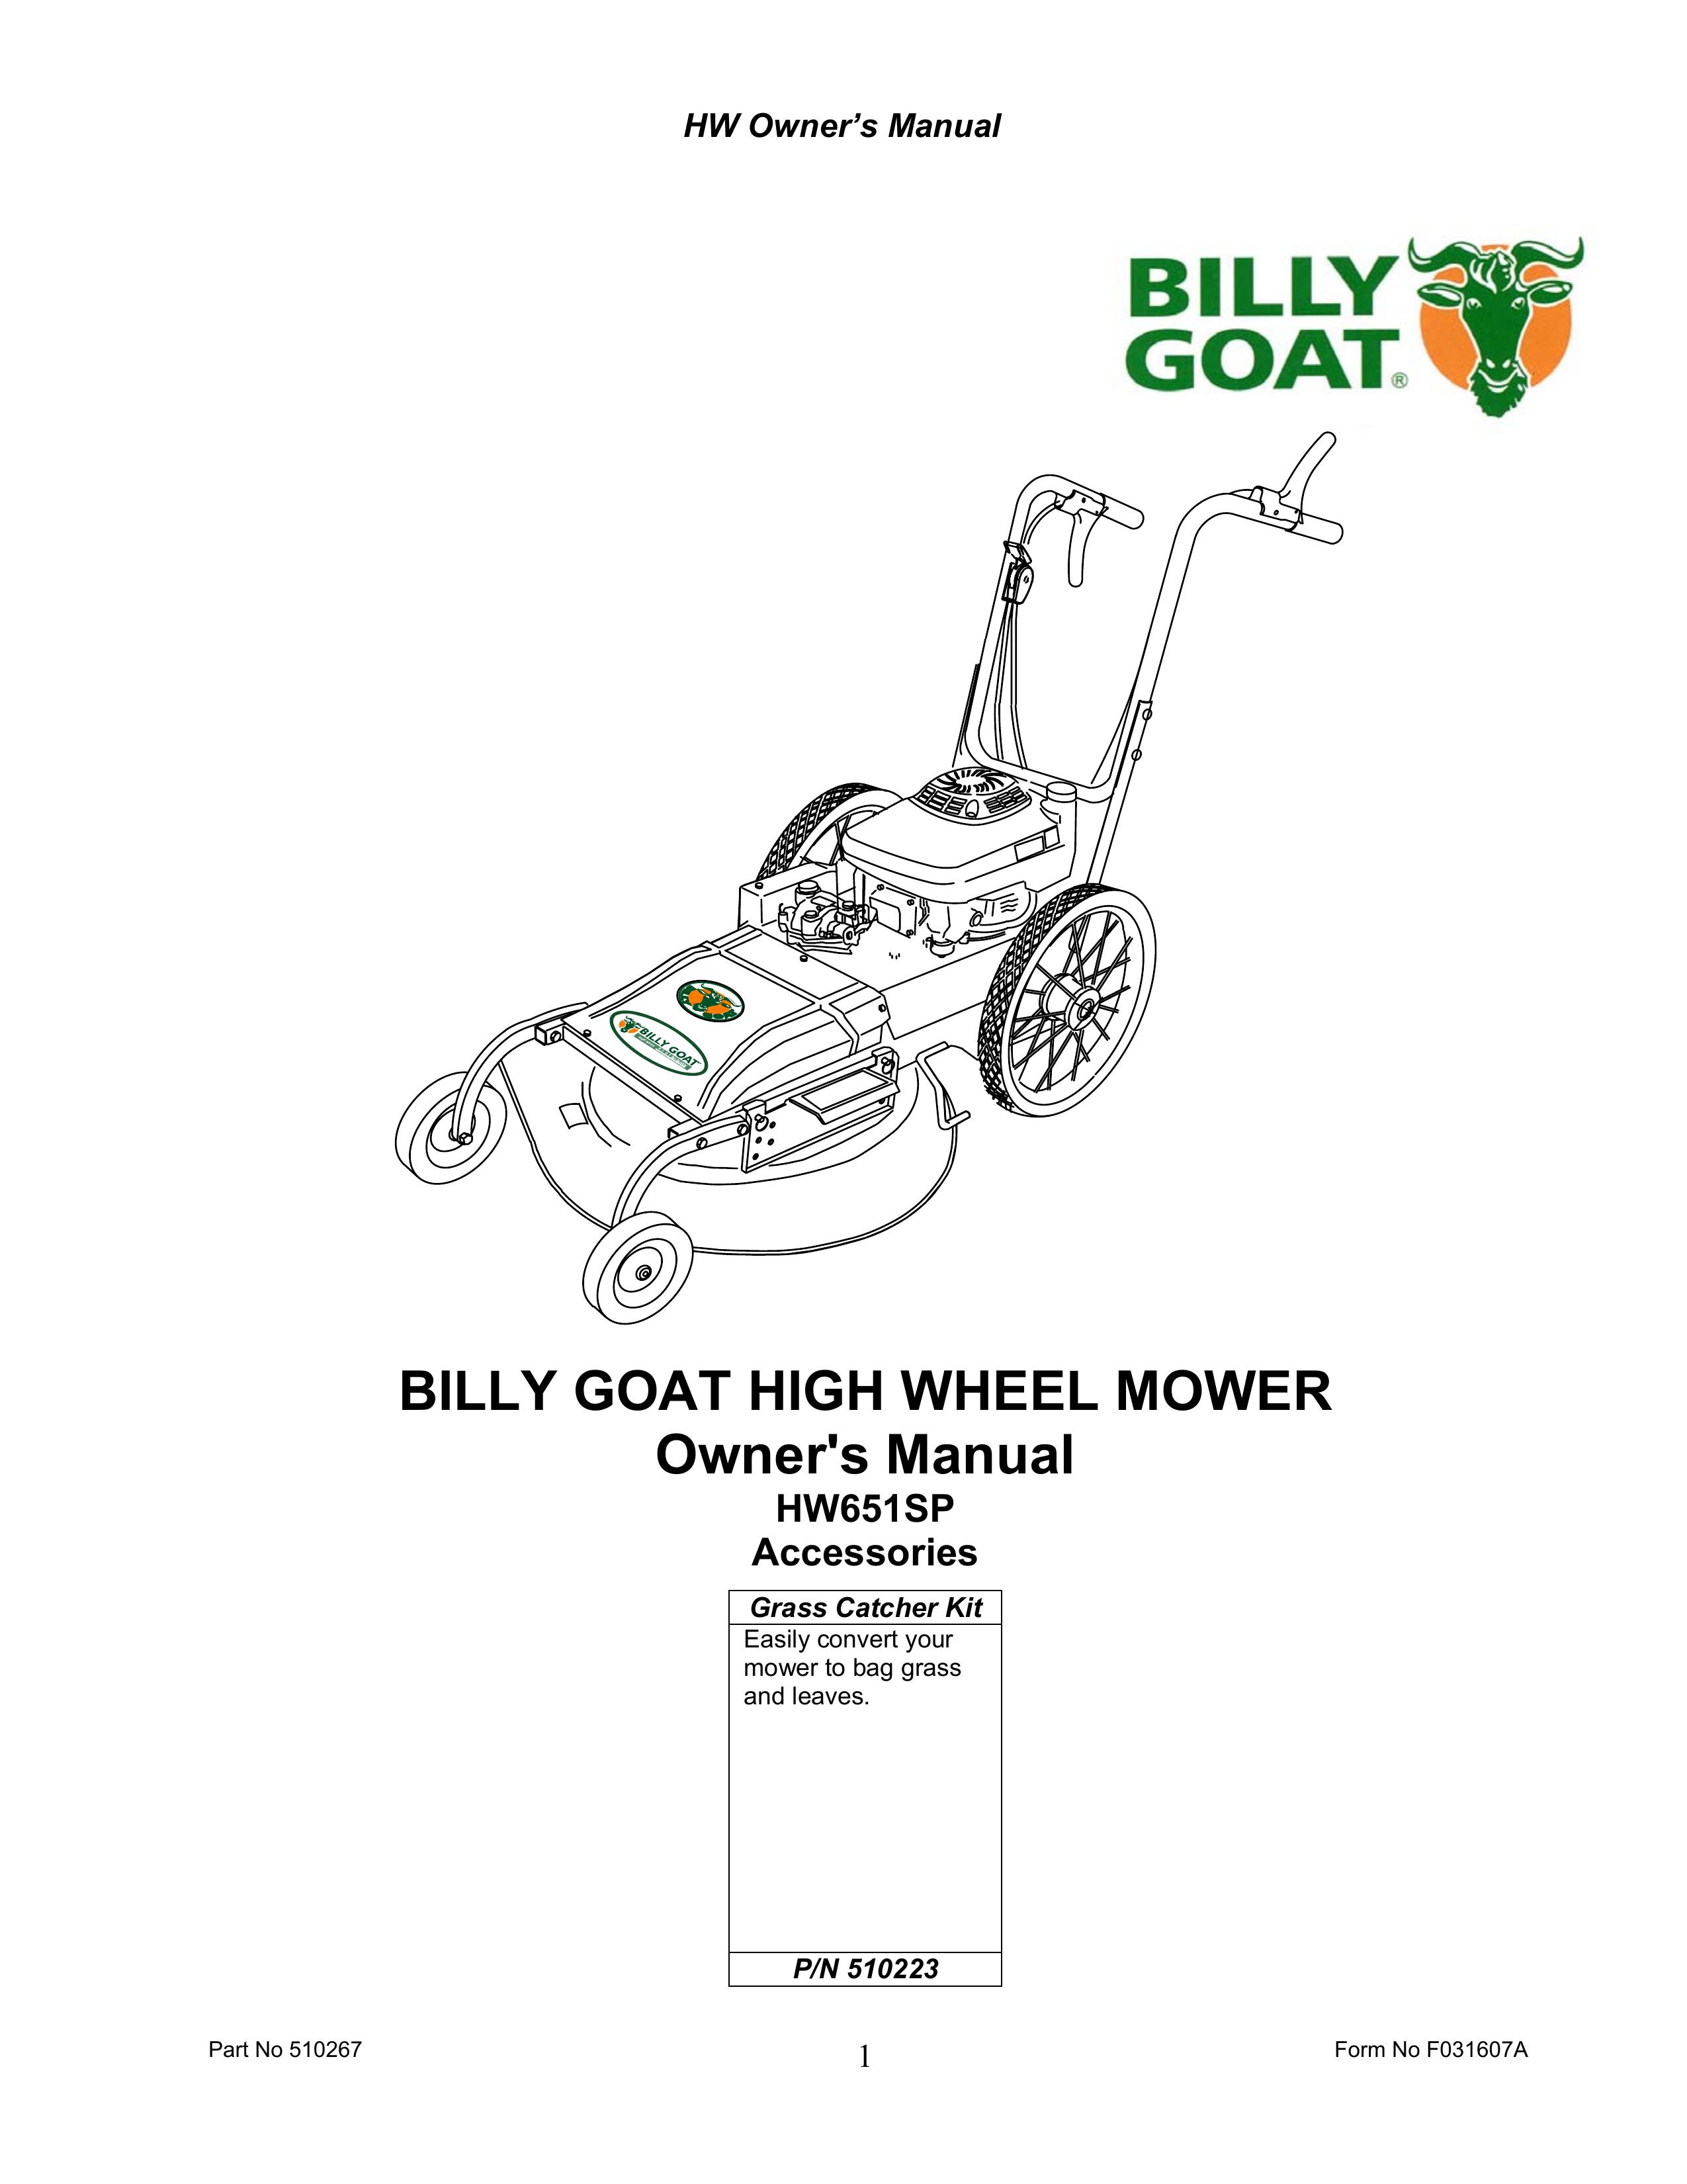 Billy Goat HW651SP Lawn Mower User Manual